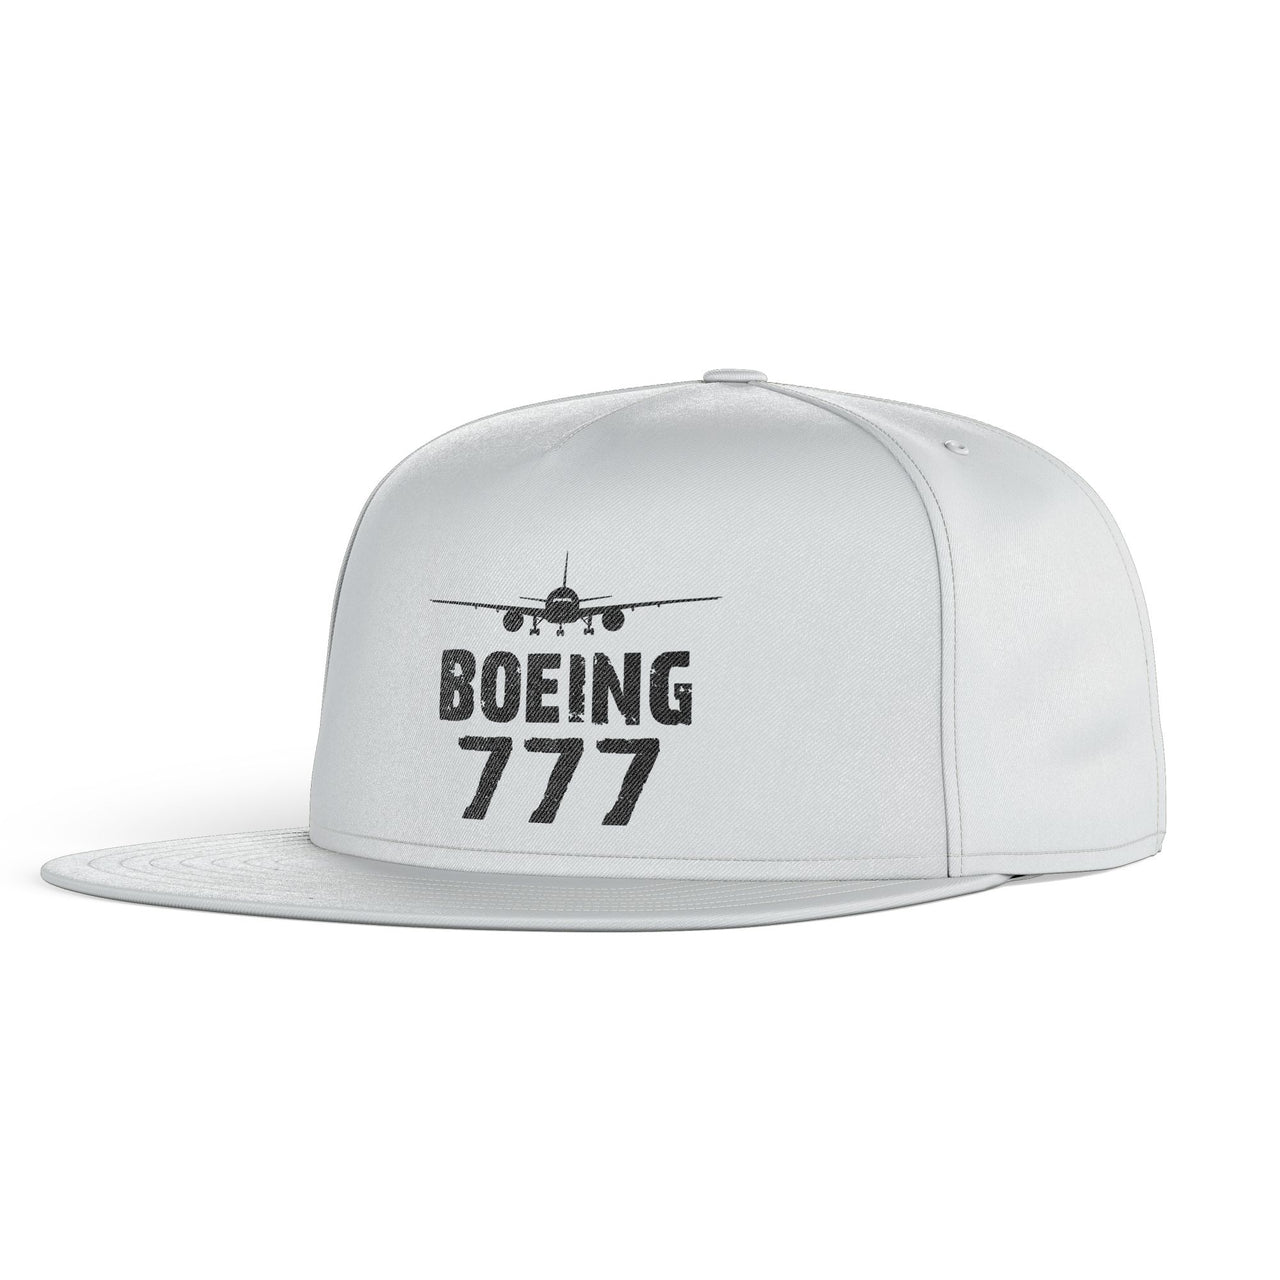 Boeing 777 & Plane Designed Snapback Caps & Hats